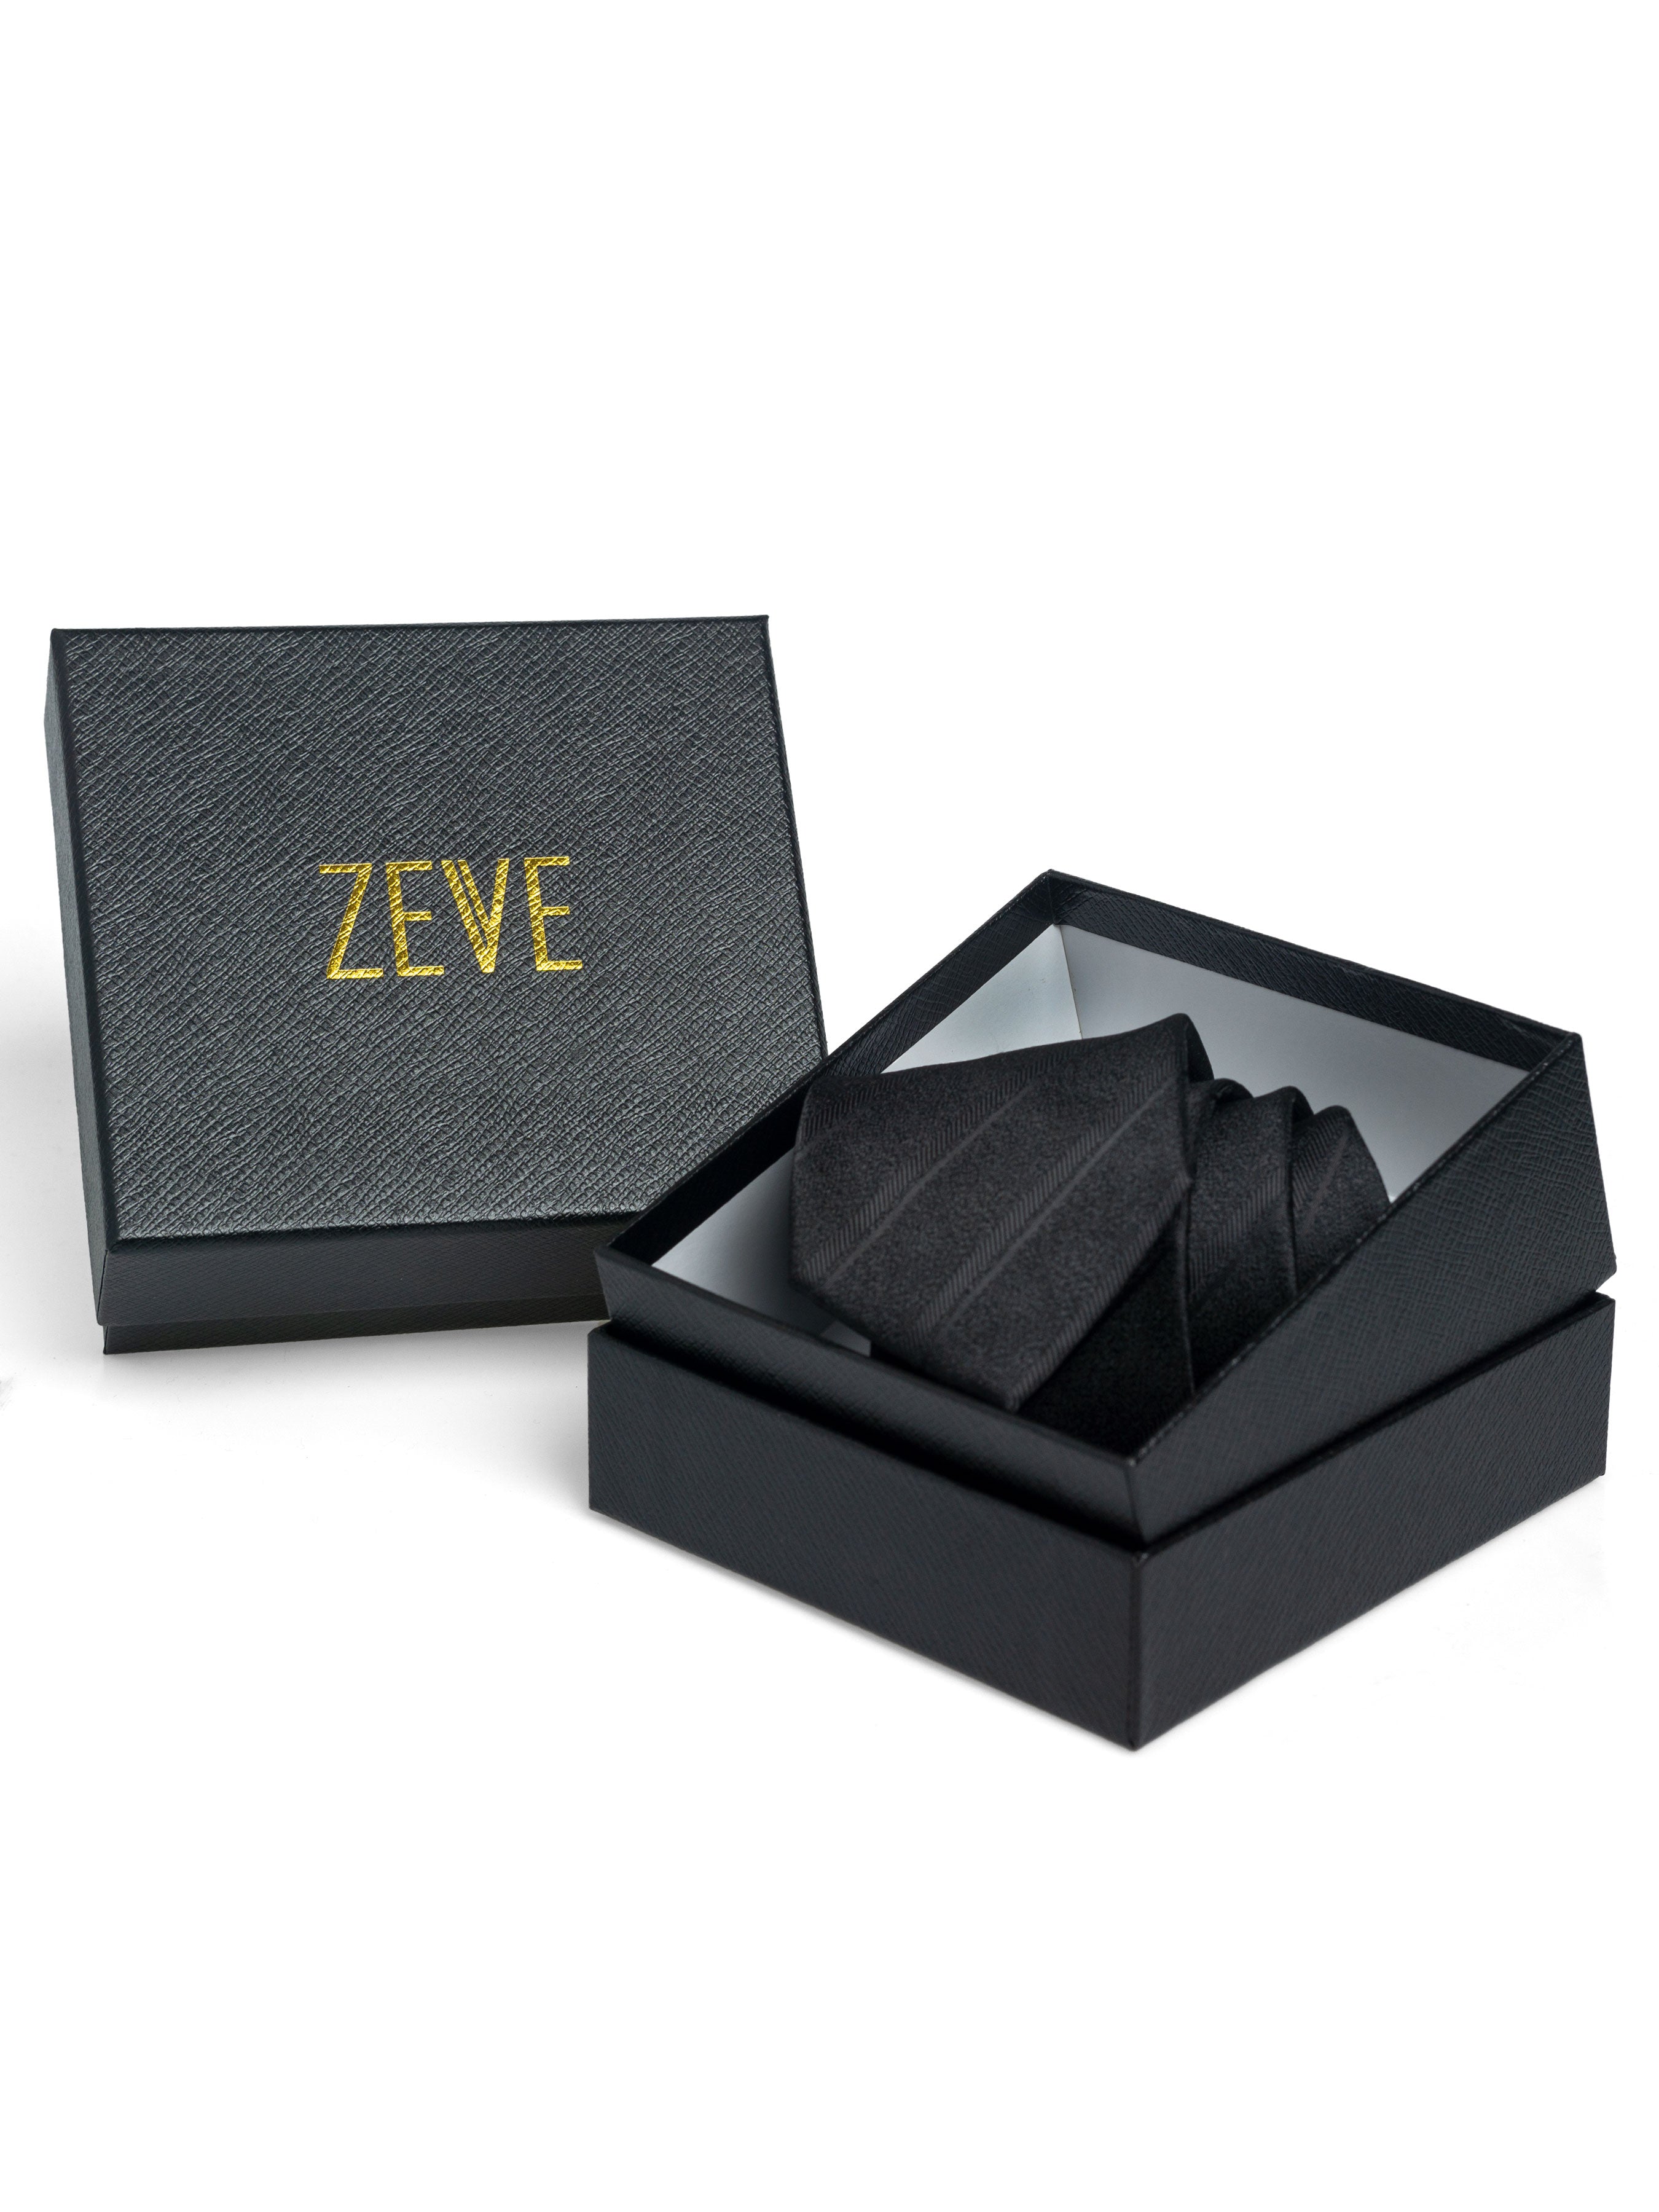 Diamond Medallion Tie - Navy Blue - Zeve Shoes